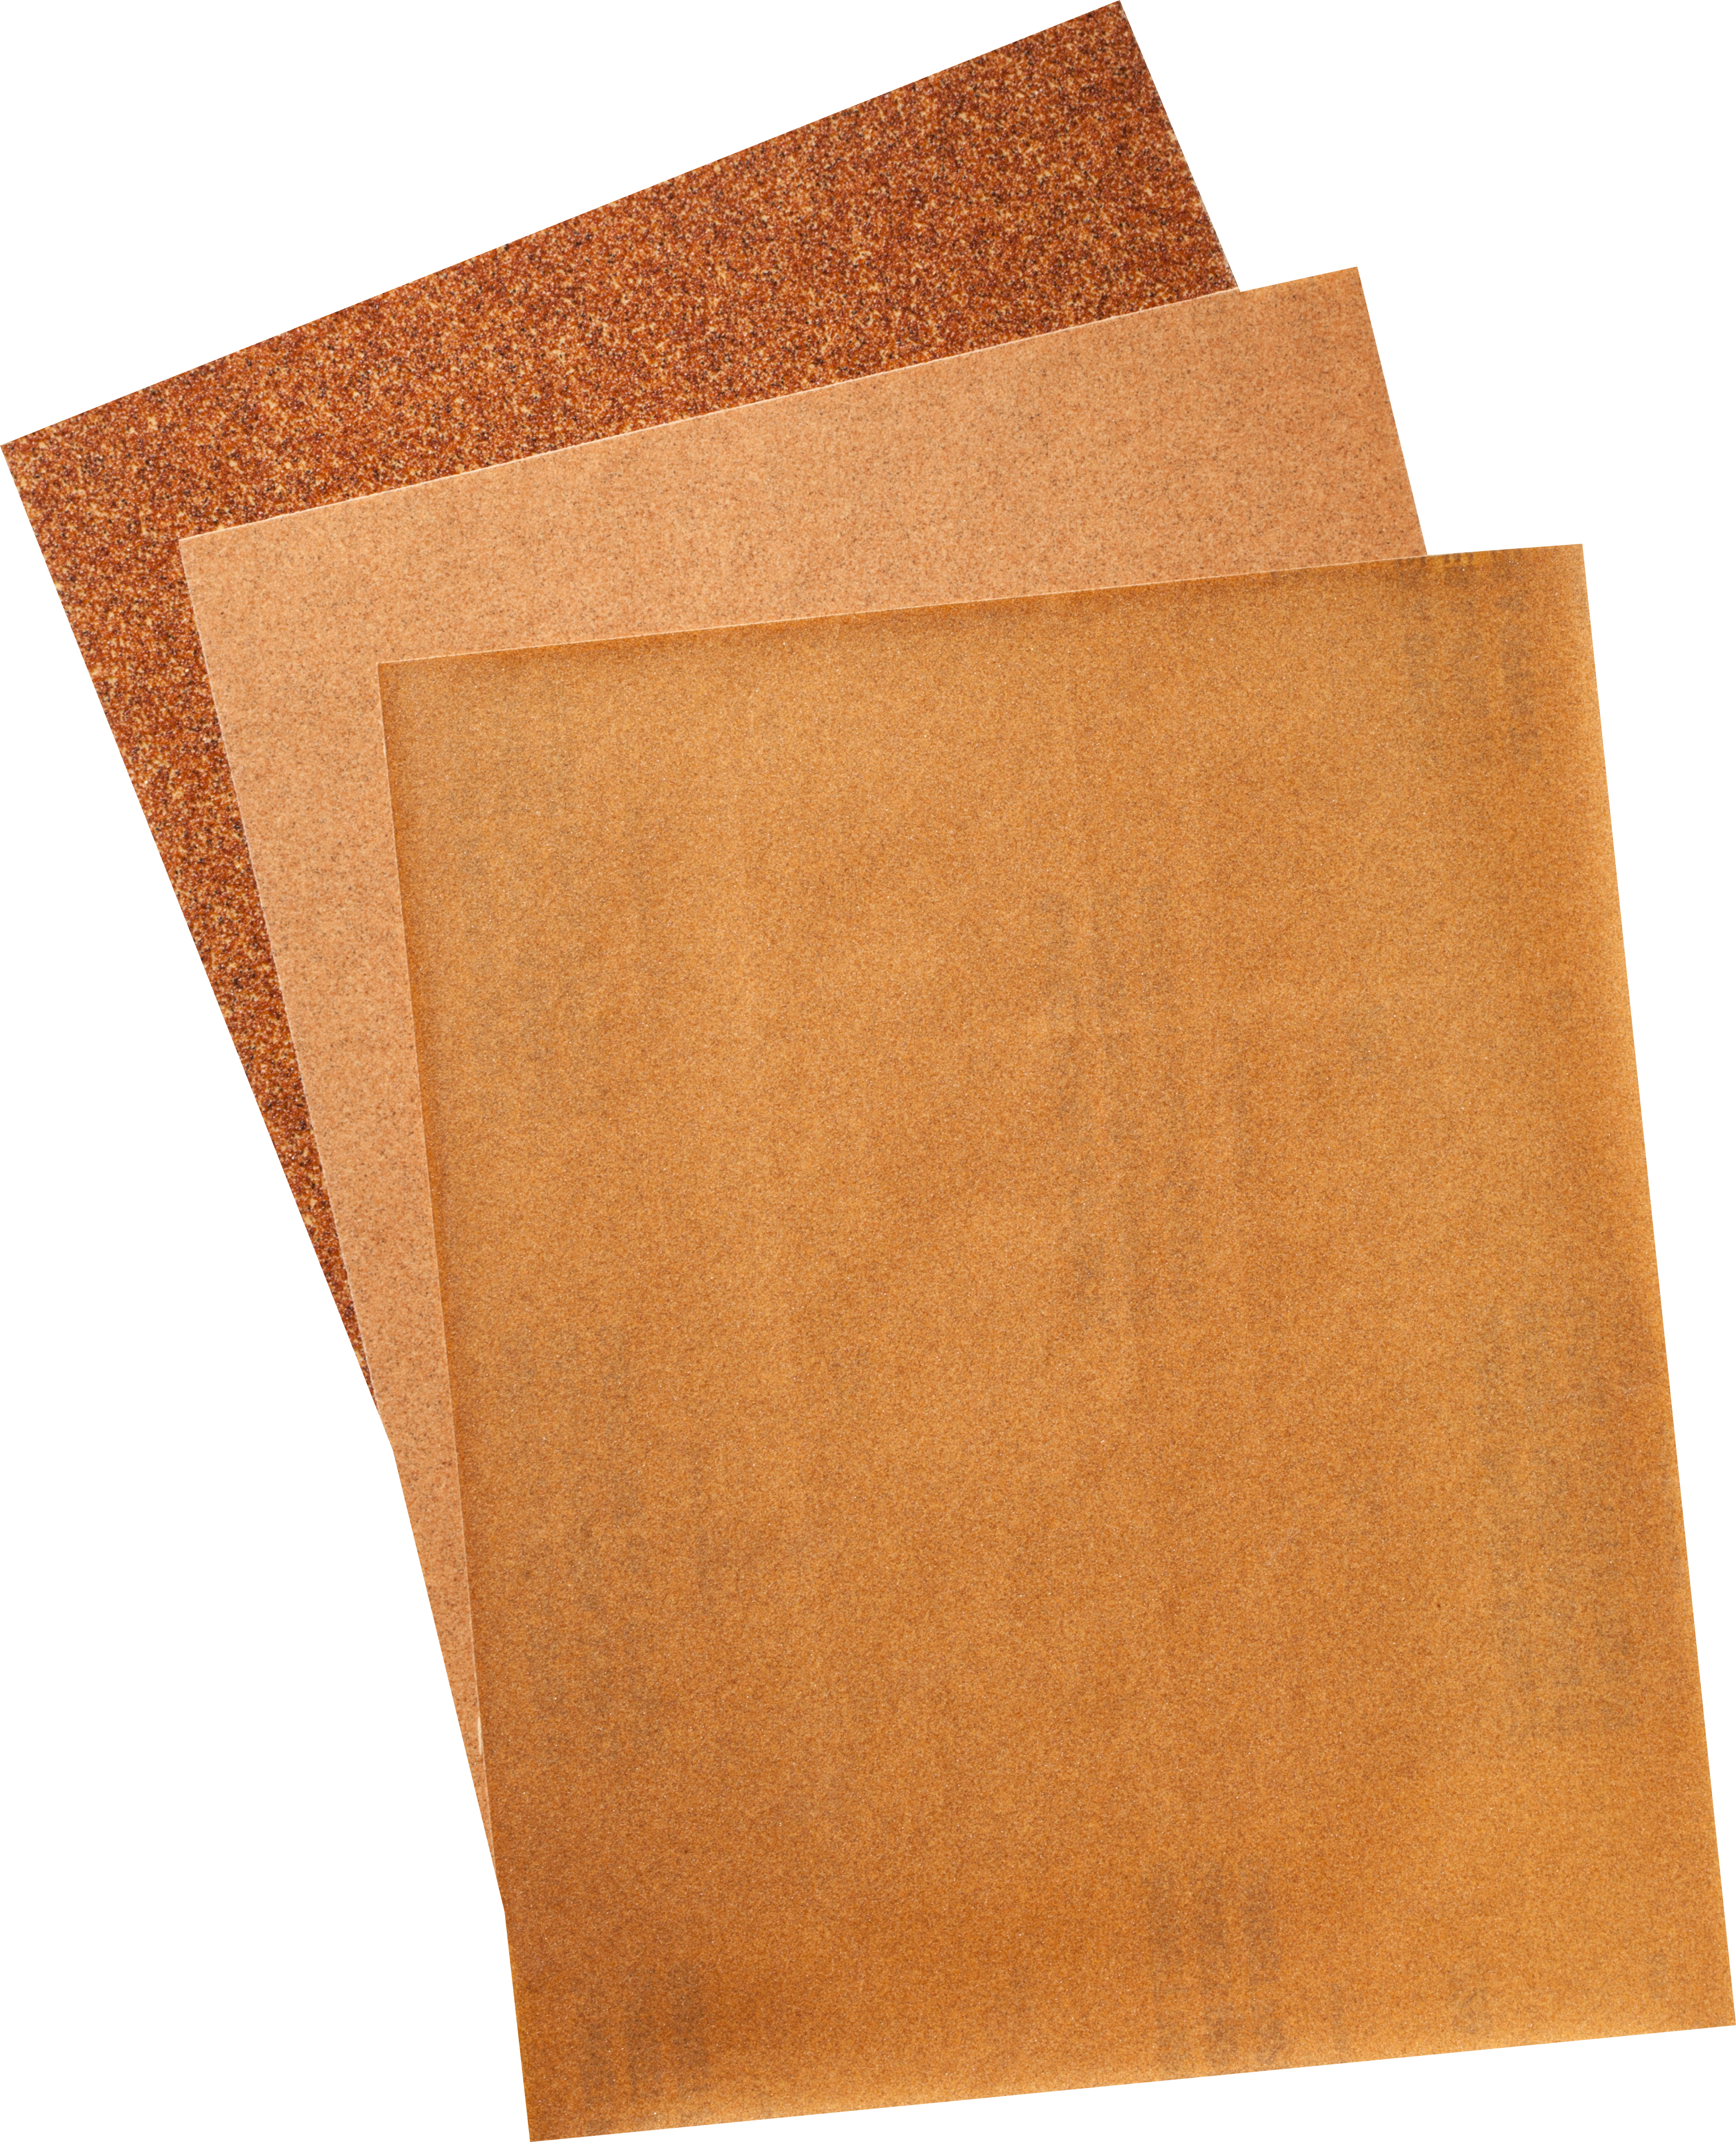 9 X 11 PAPER GARNET 50D - Sandpaper Sheets